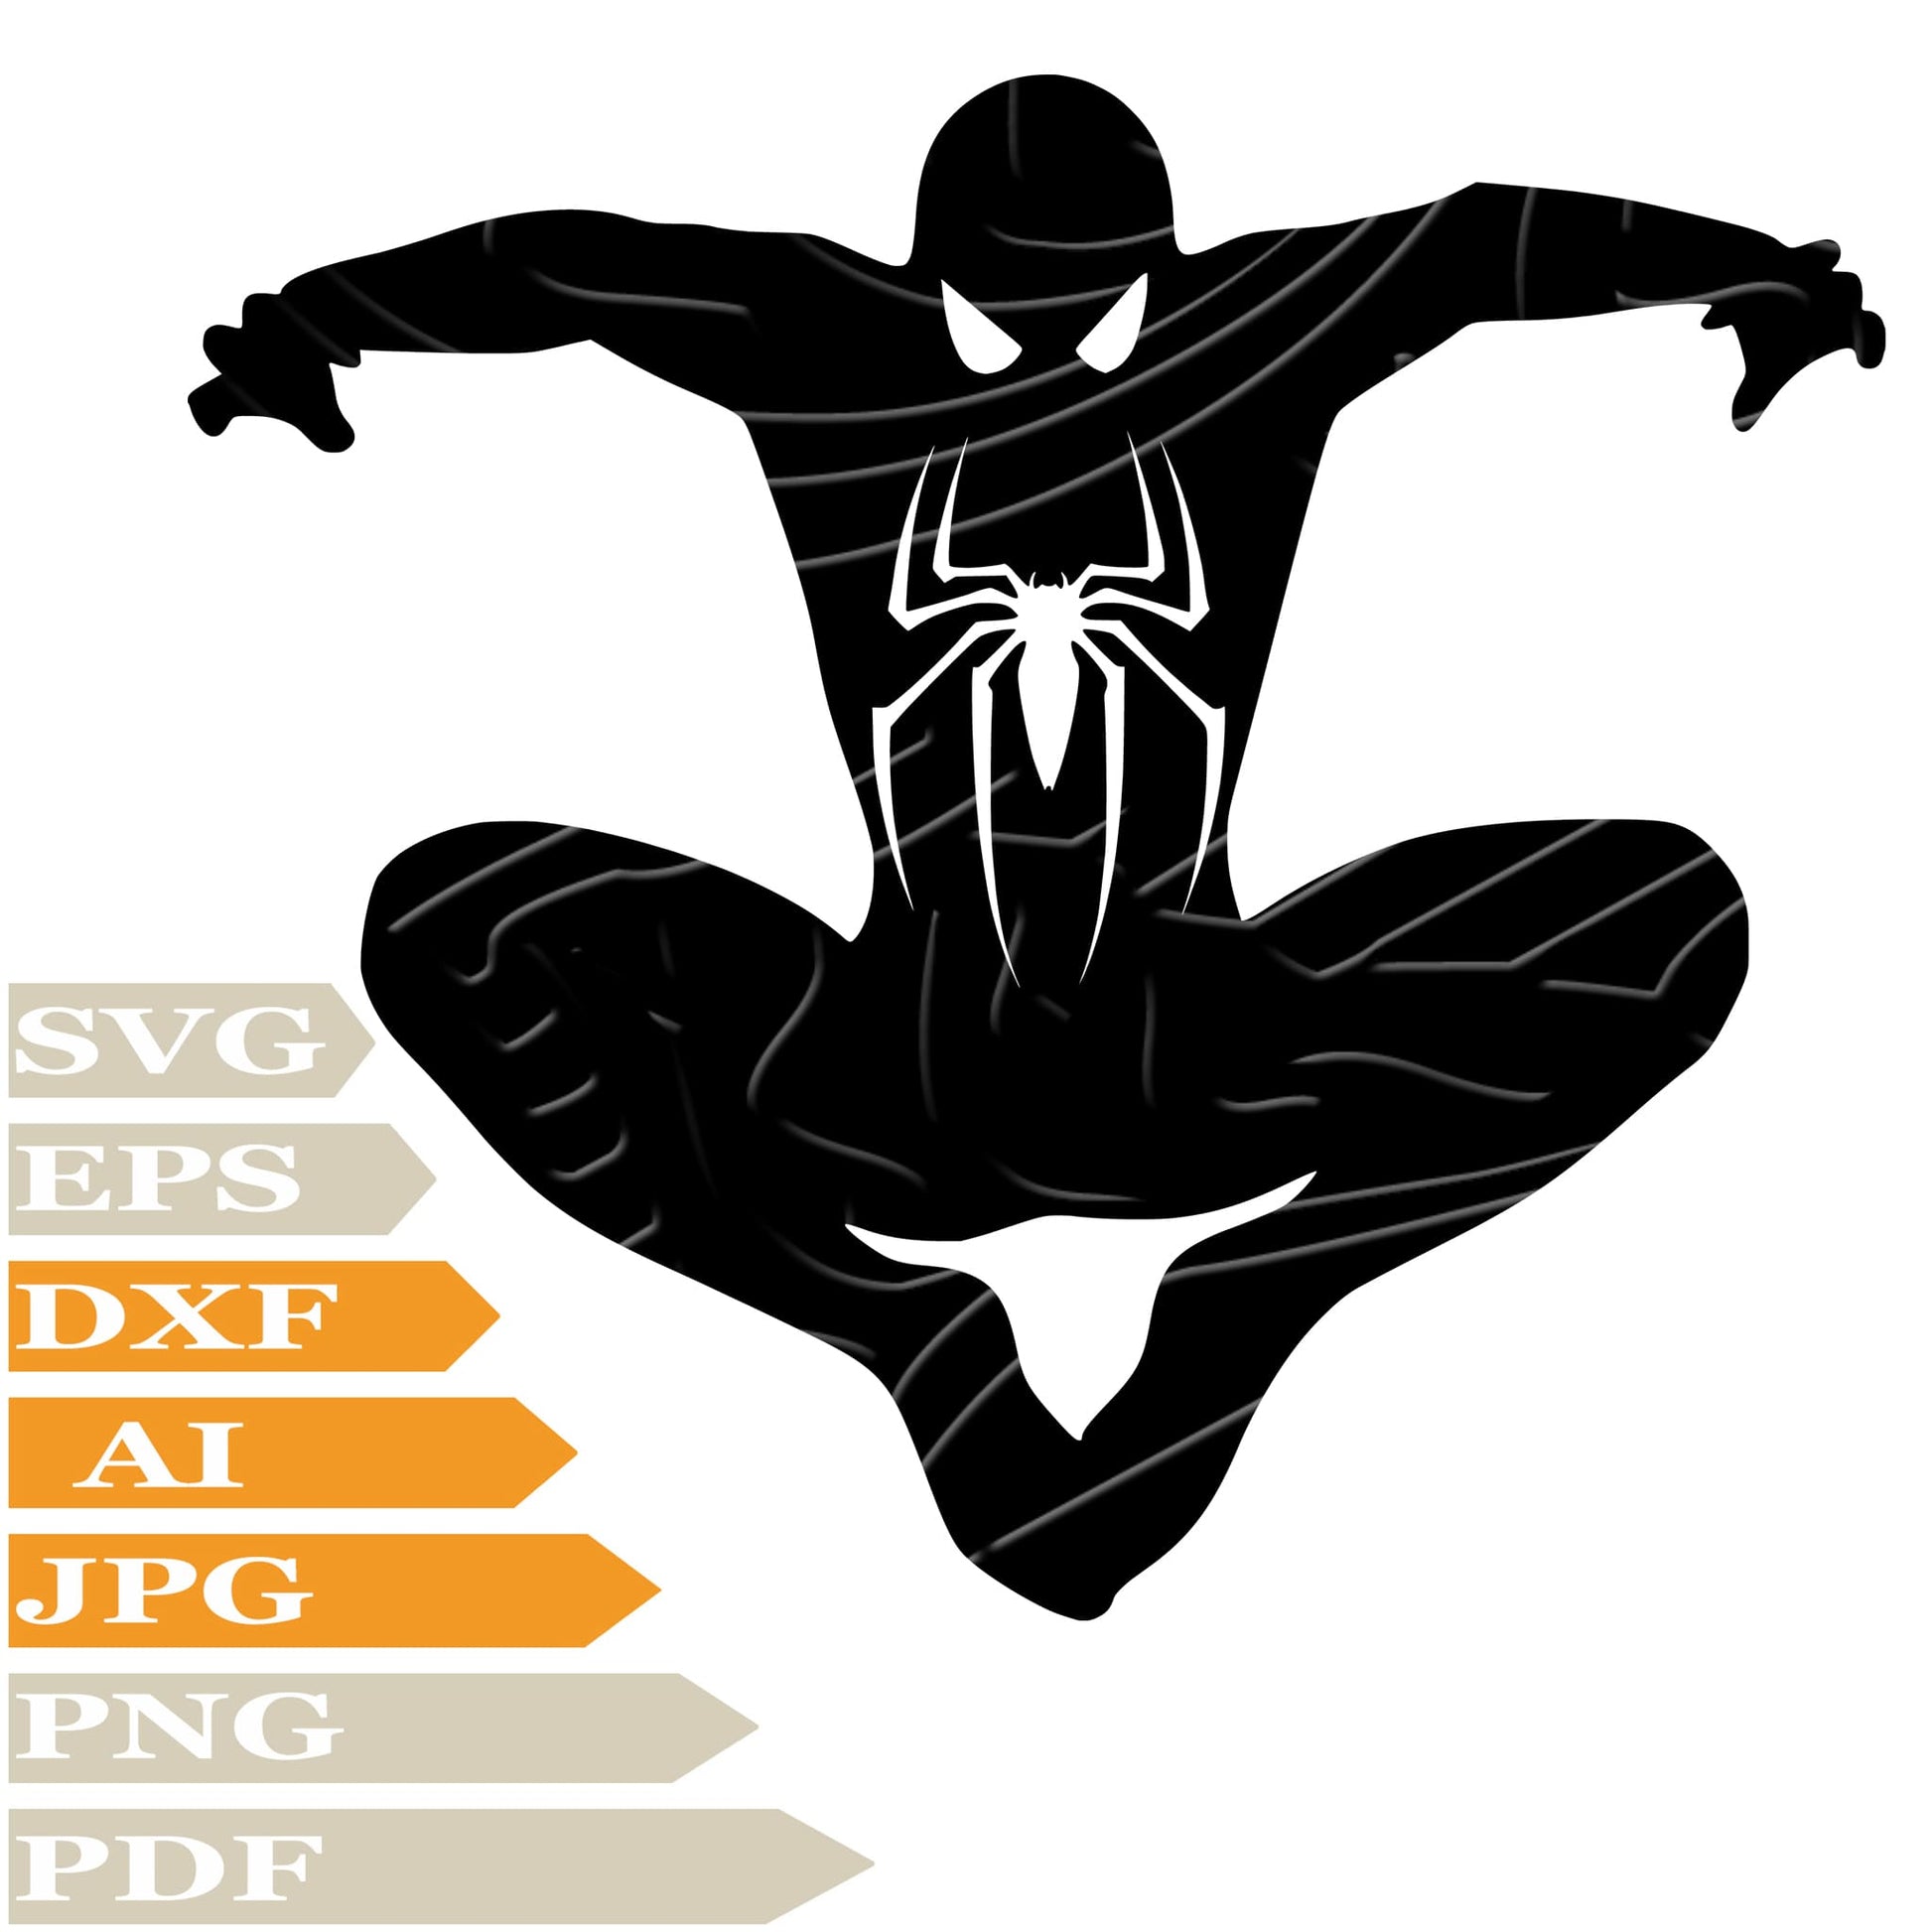 Spider SVG File, Spiderman Logo Vector Graphics, Spiderman SVG Design, For Cricut, Cut File, Clipart, For Tattoo, Silhouette